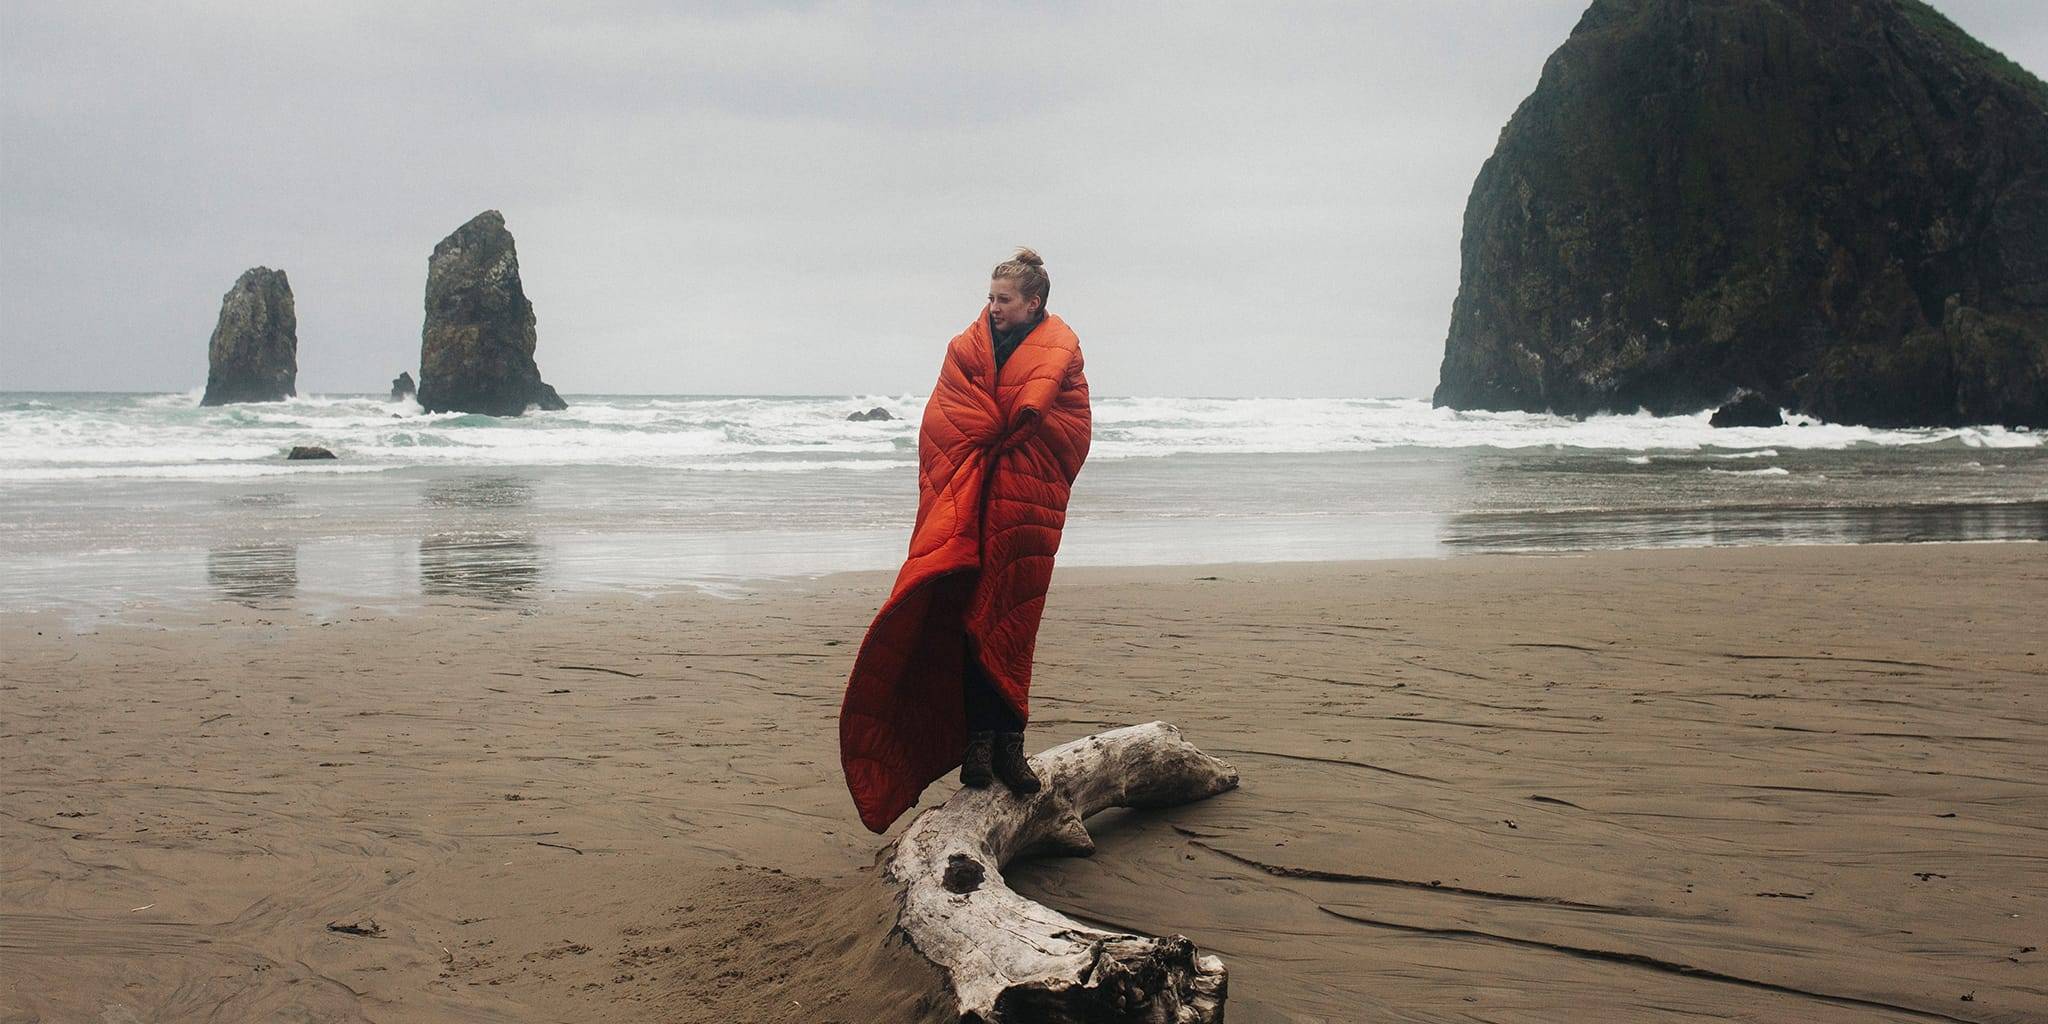 Kristian Irey standing on driftwood by Haystack Rock with an Orange Rumpl blanket